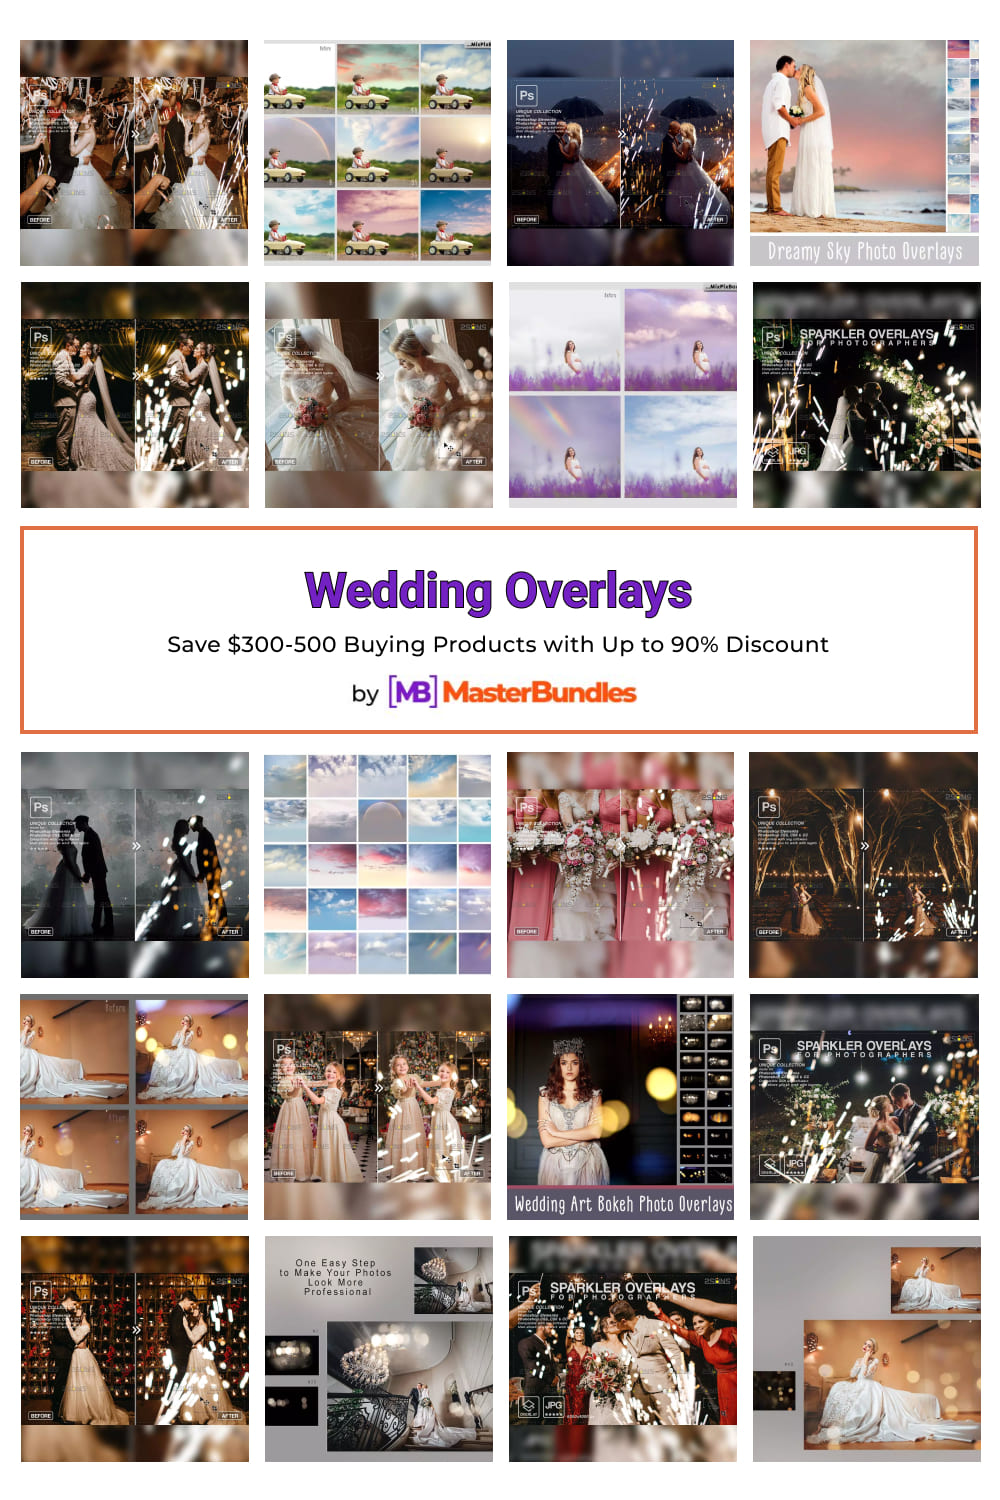 Wedding Overlays Pinterest image.